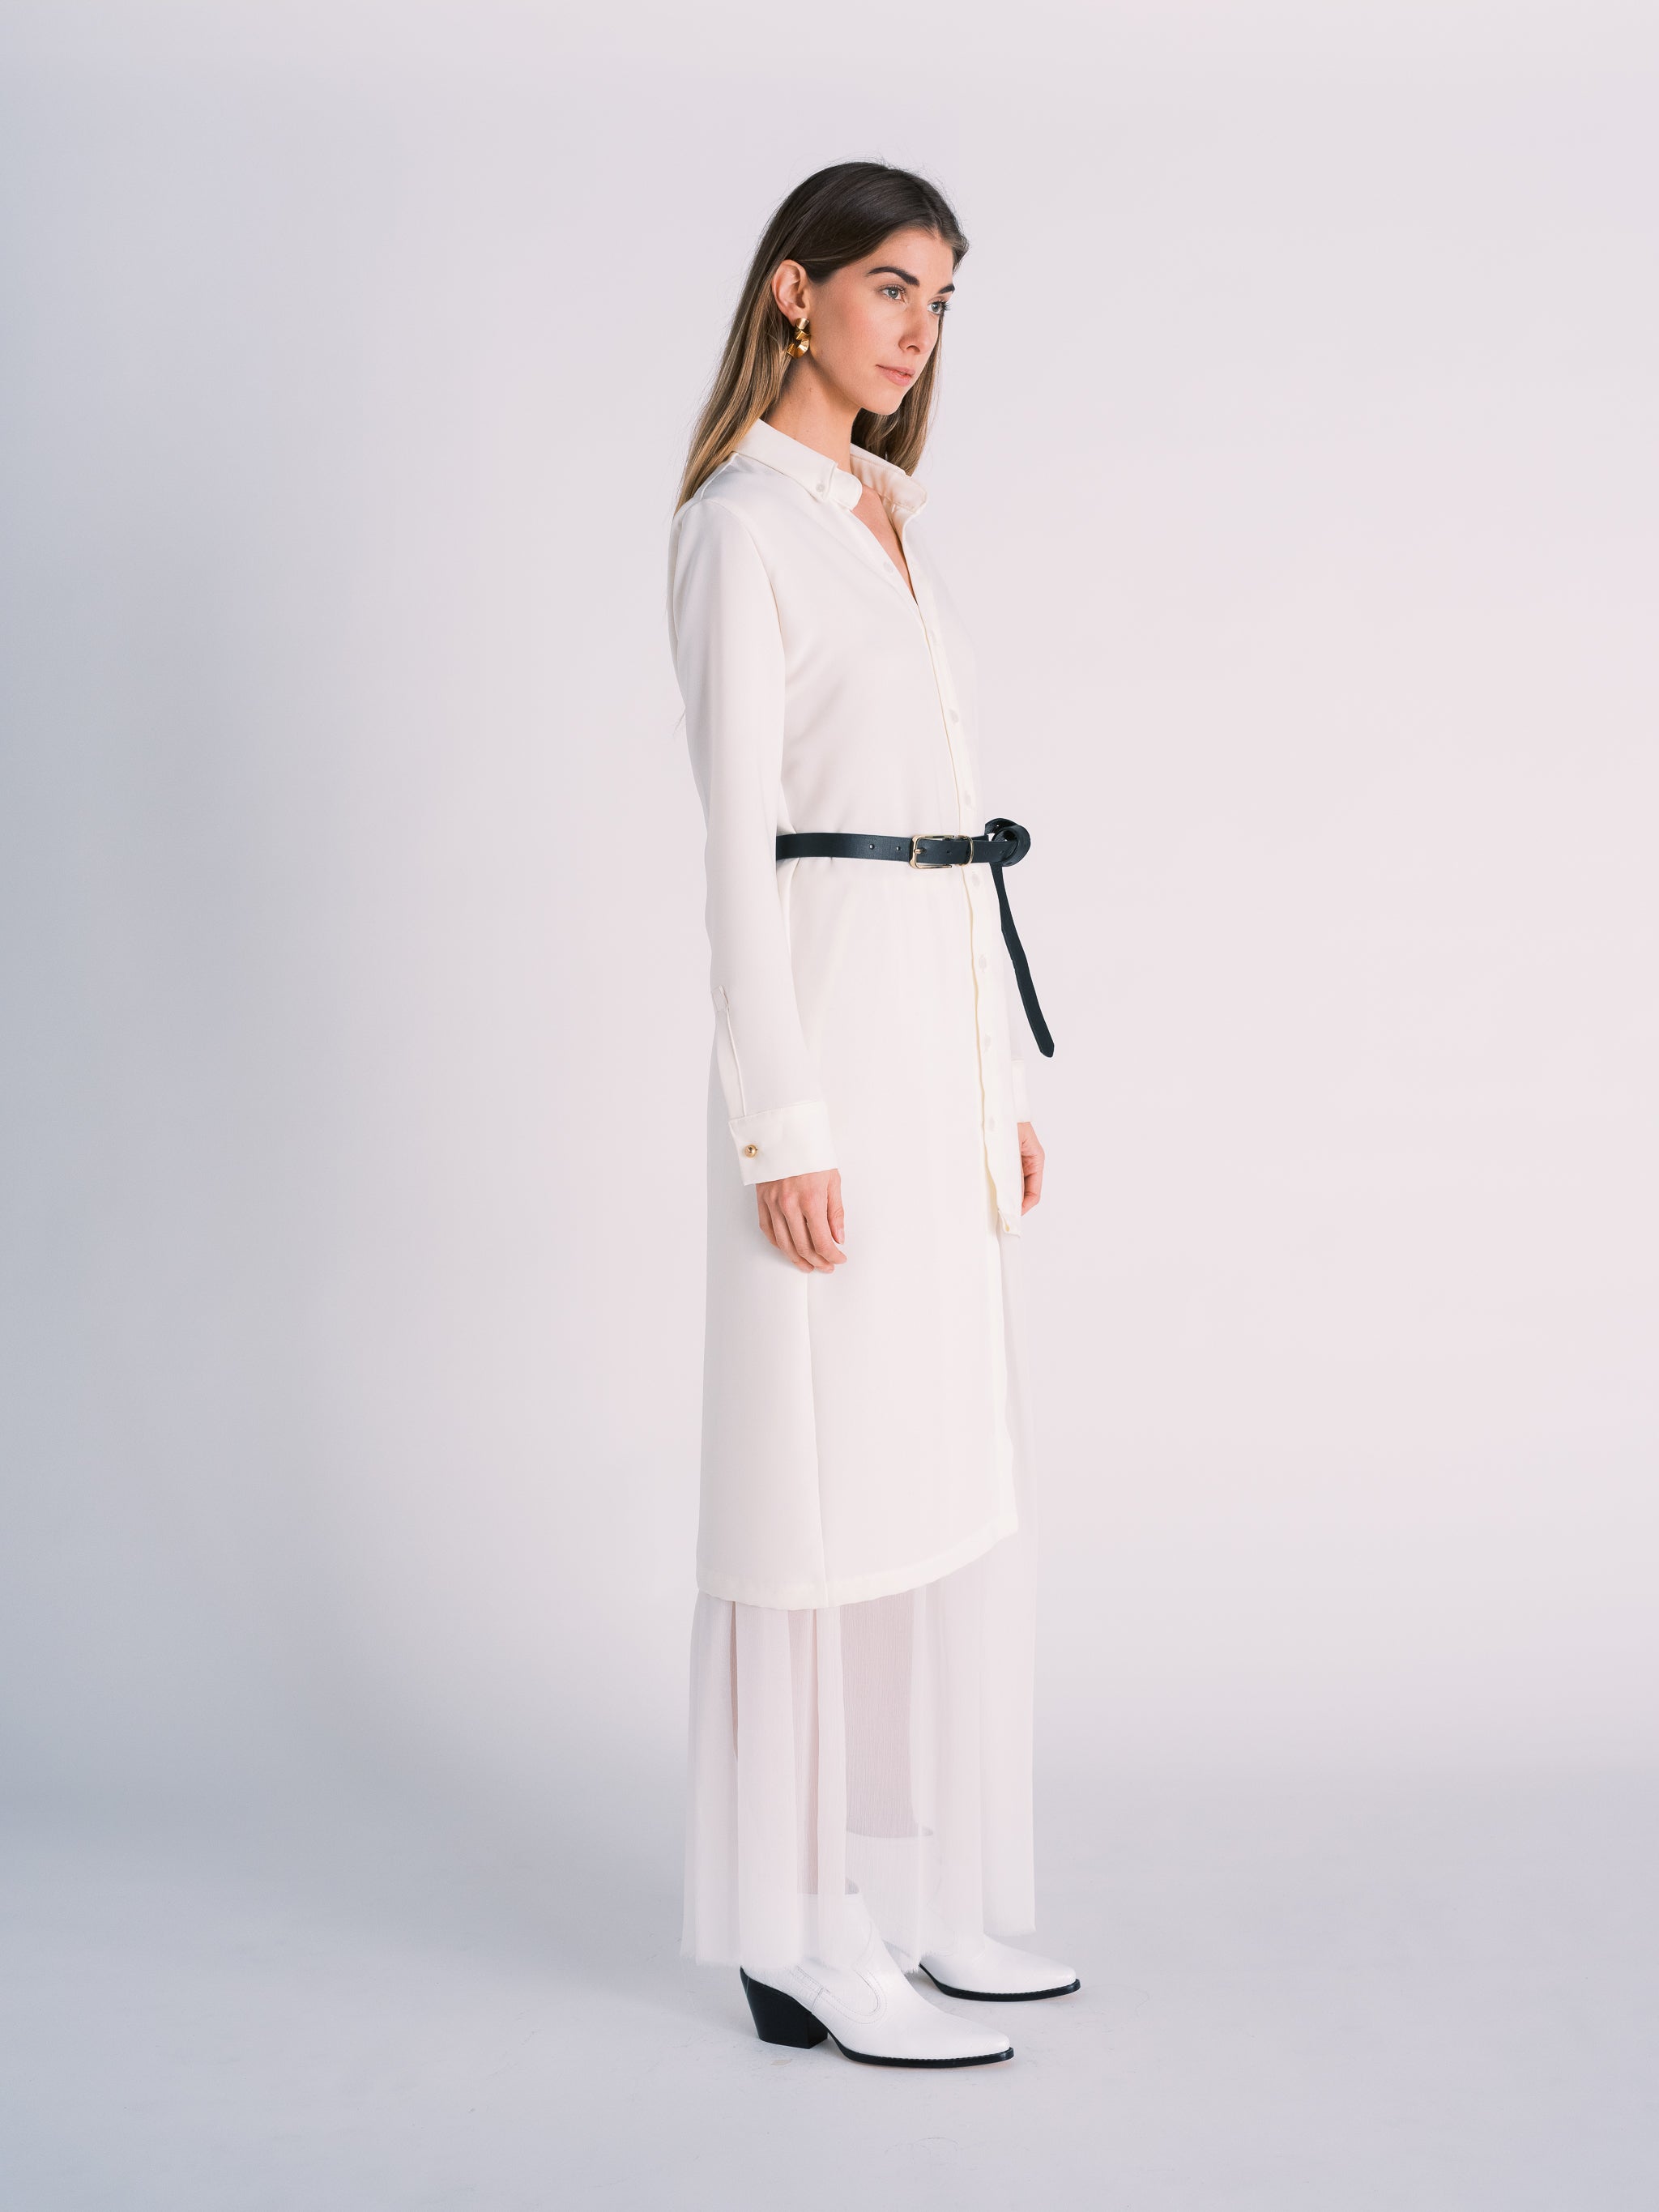 Asymmetric Collared Button Down Dress with Silk Slip Maxi Skirt in White